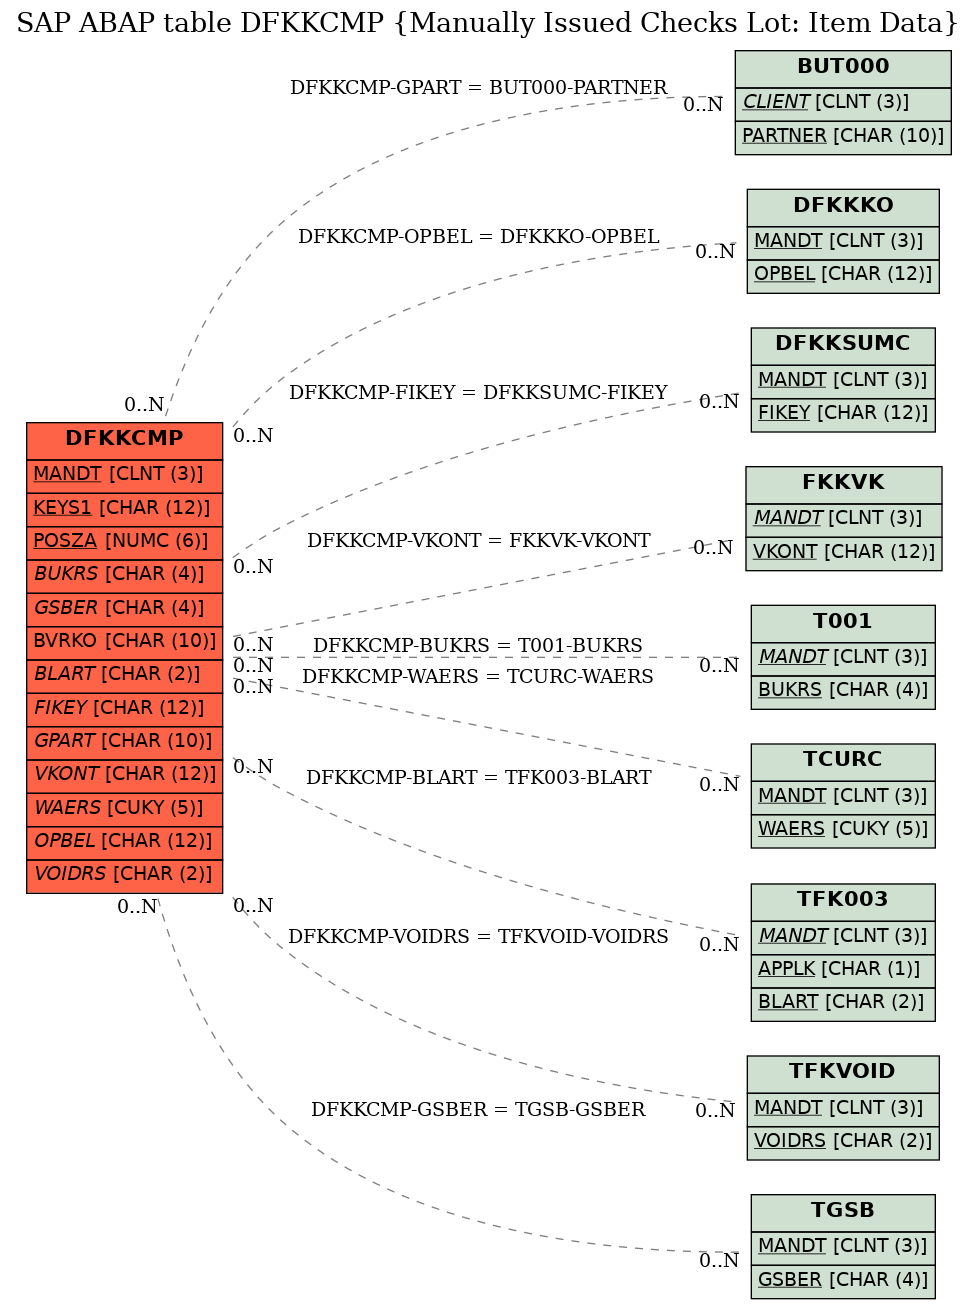 E-R Diagram for table DFKKCMP (Manually Issued Checks Lot: Item Data)